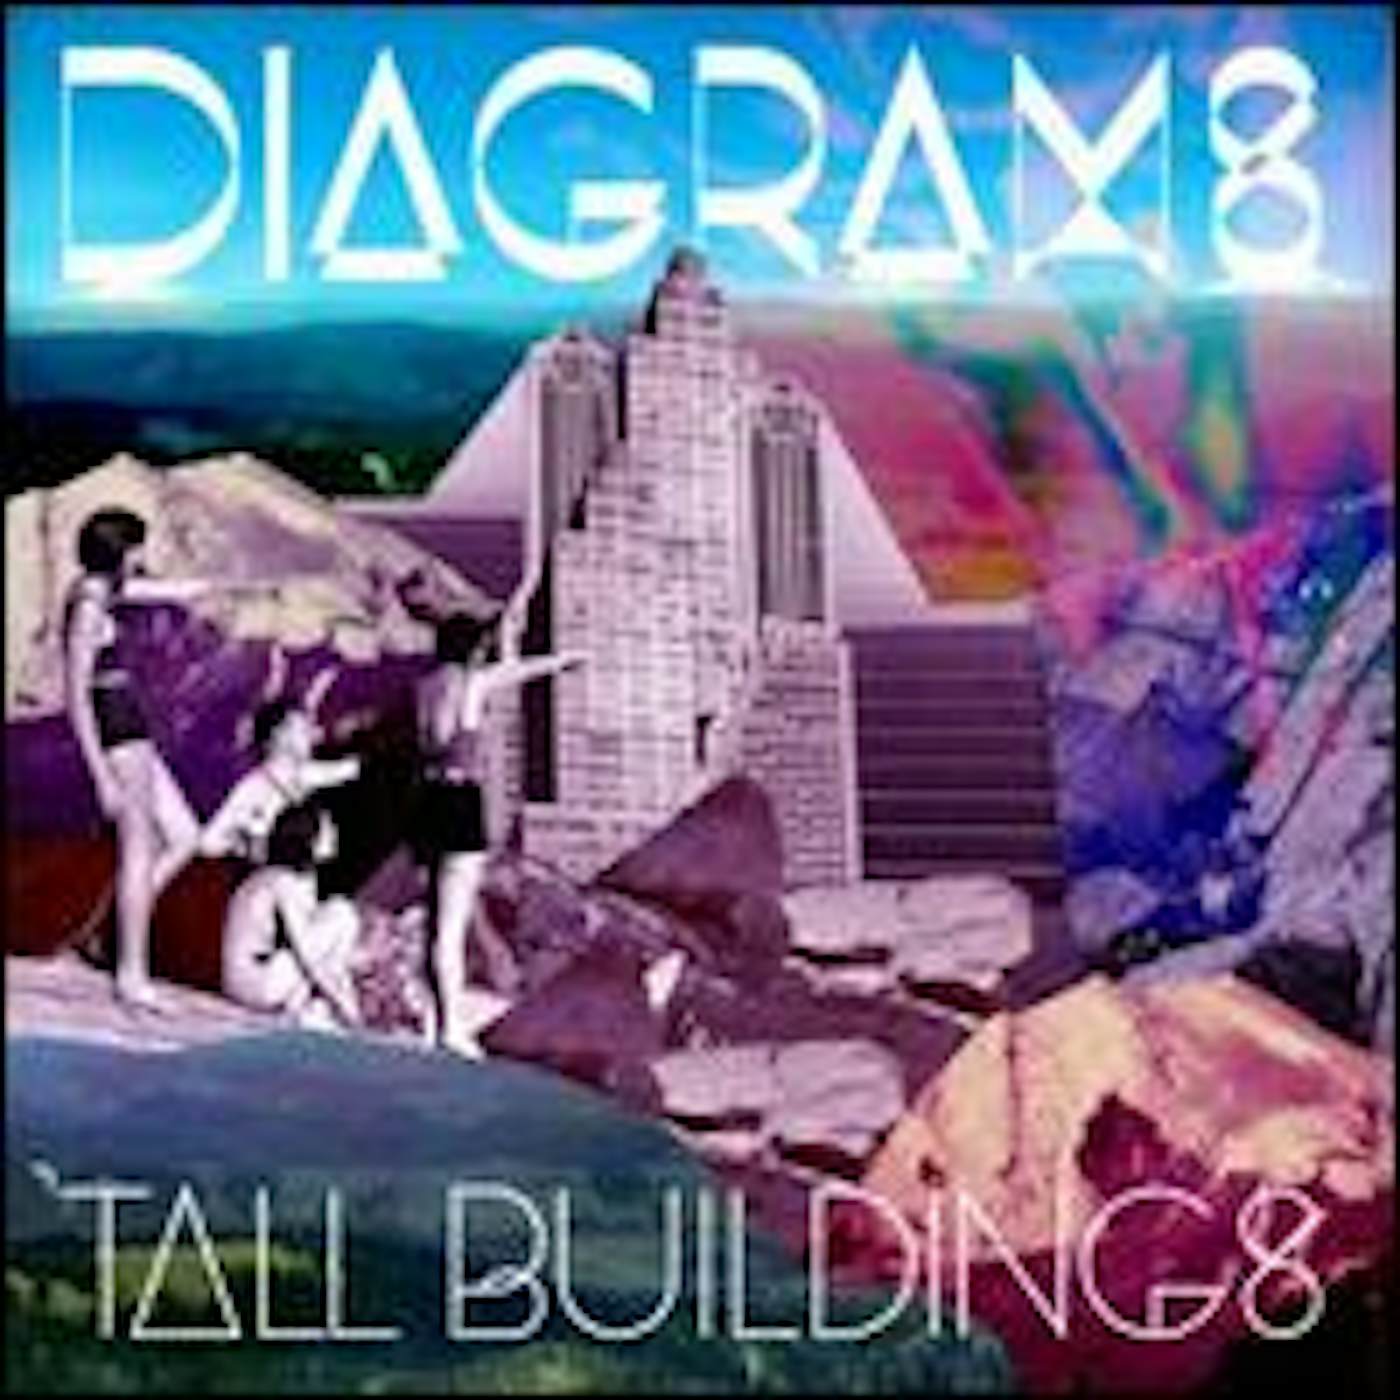 Diagrams Tall Buildings Vinyl Record